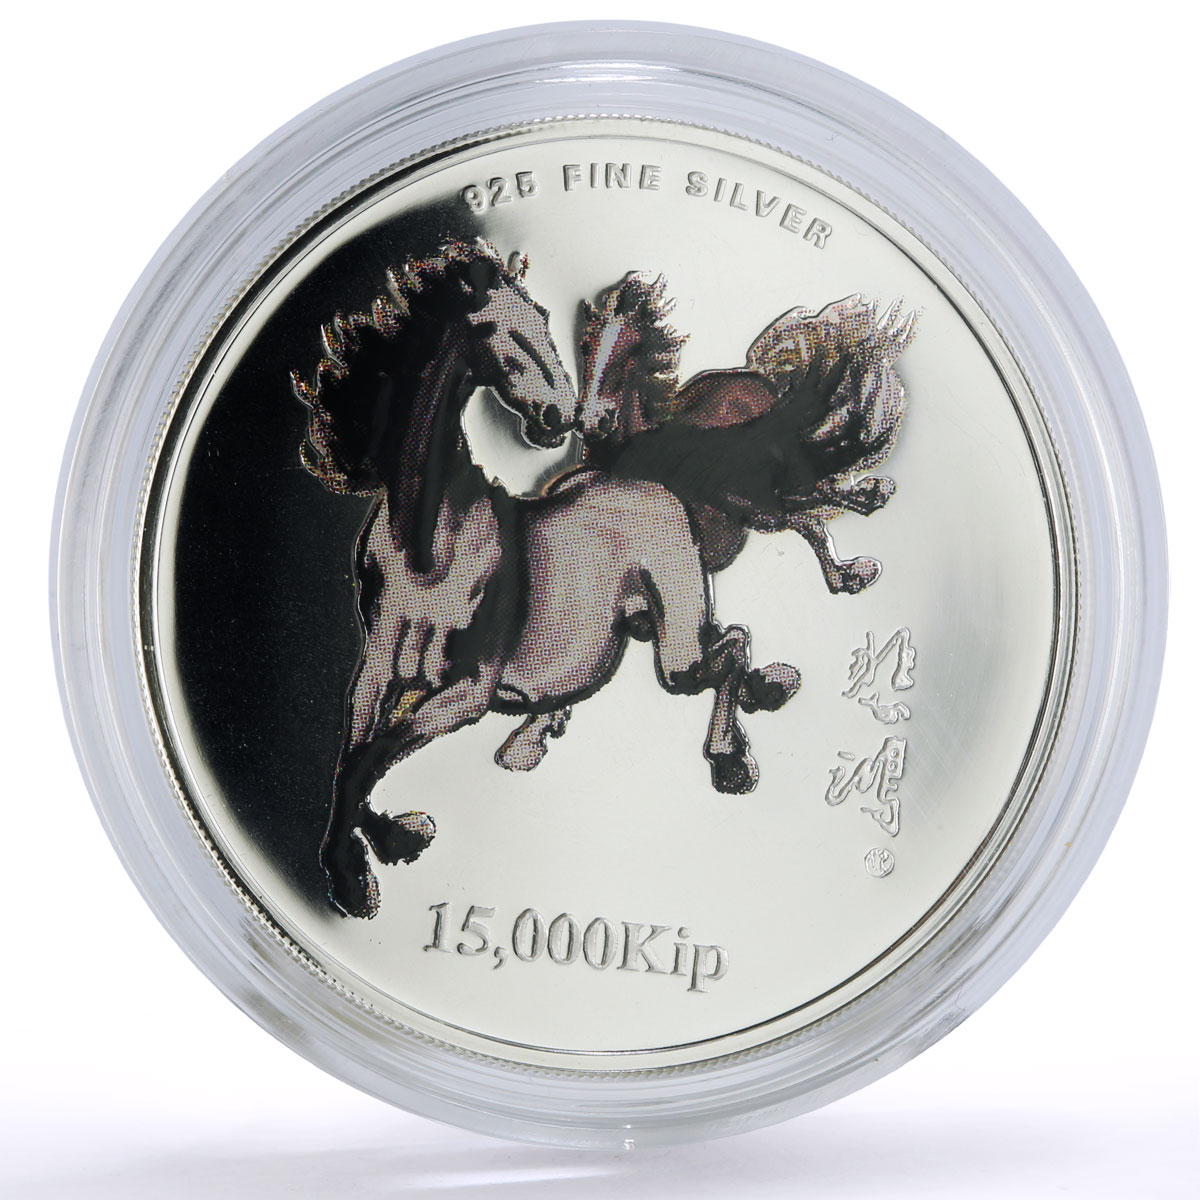 Laos 15000 kip Lunar Calendar Year of the Horse Two Horses silver coin 2002